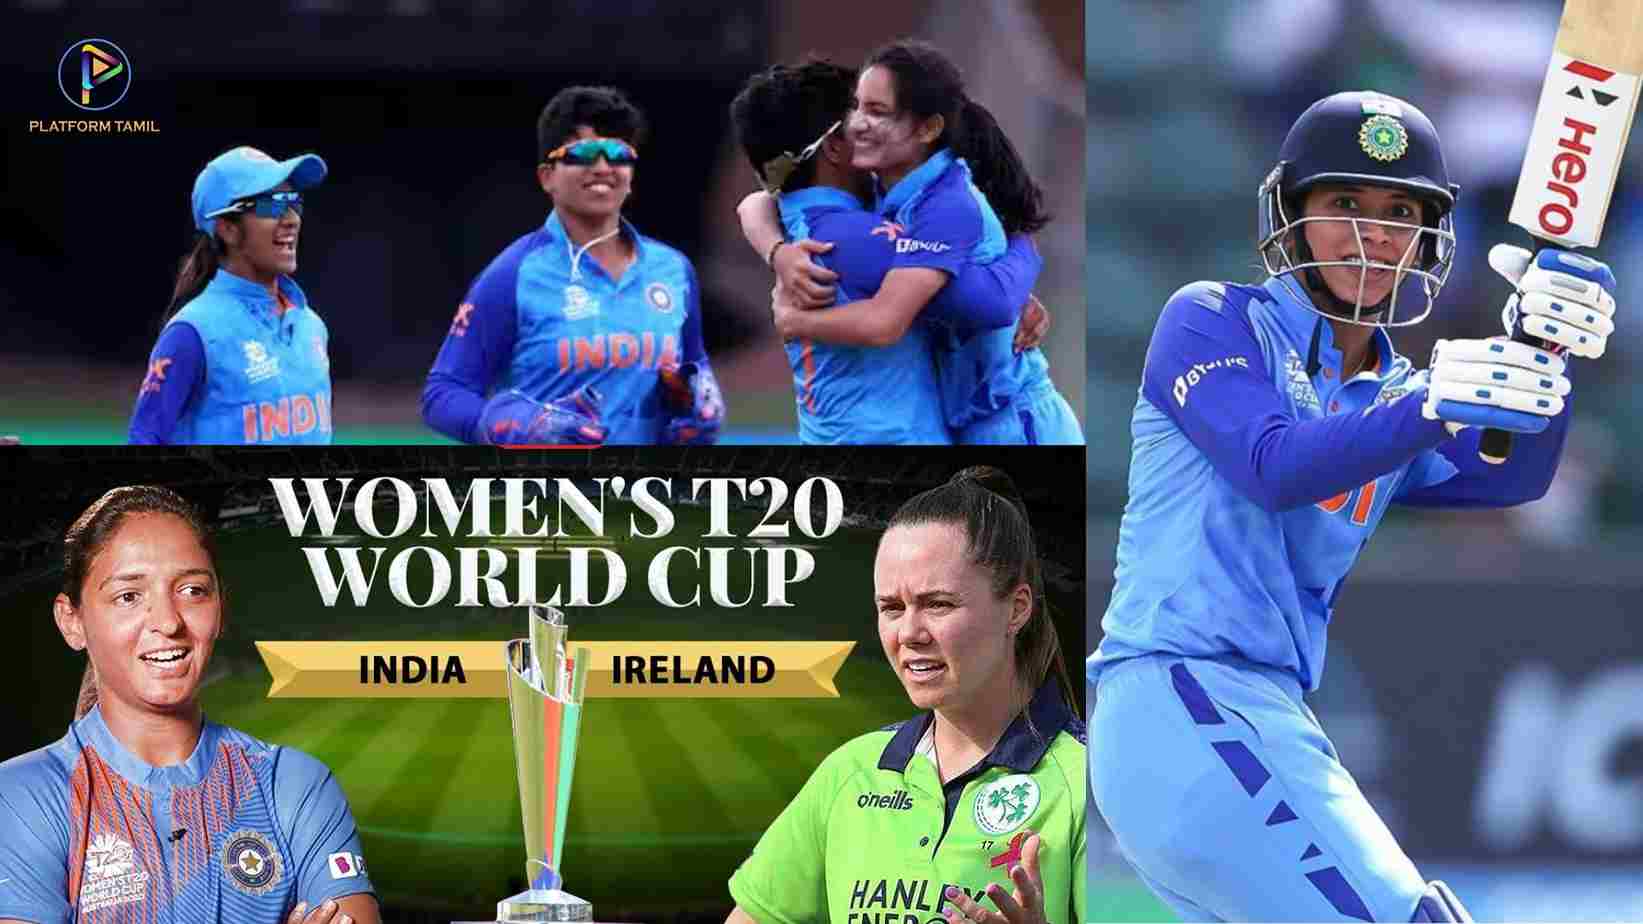 Women's T20 Worldcup (IND W vs IRE W) - Platform Tamil